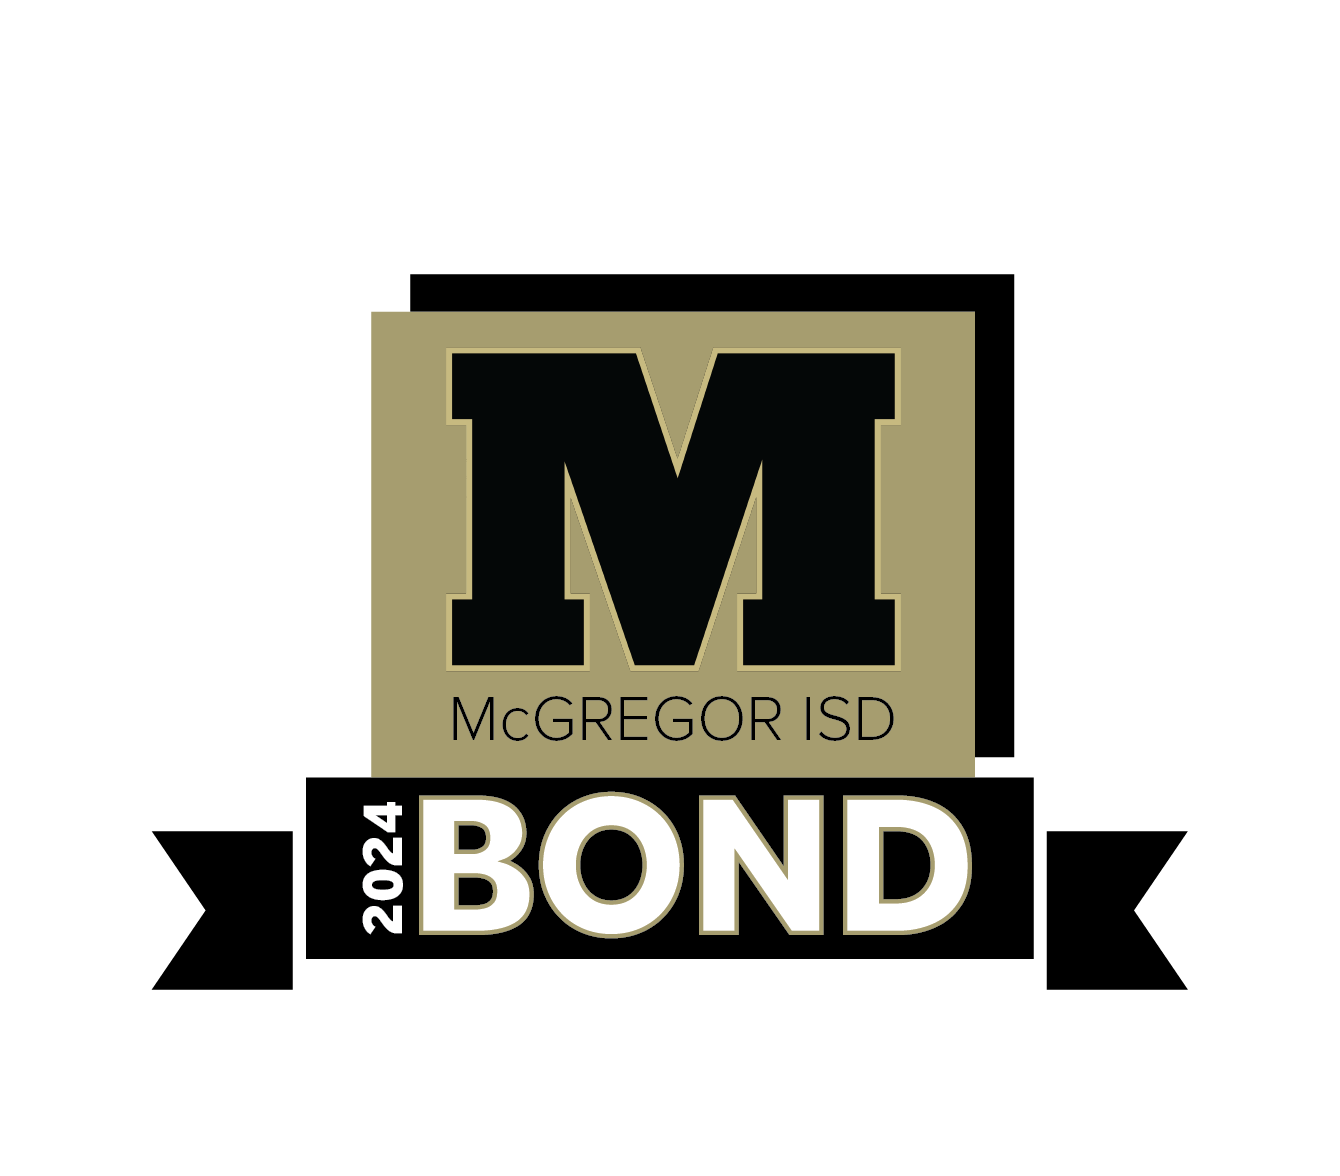 McGregor ISD Bond